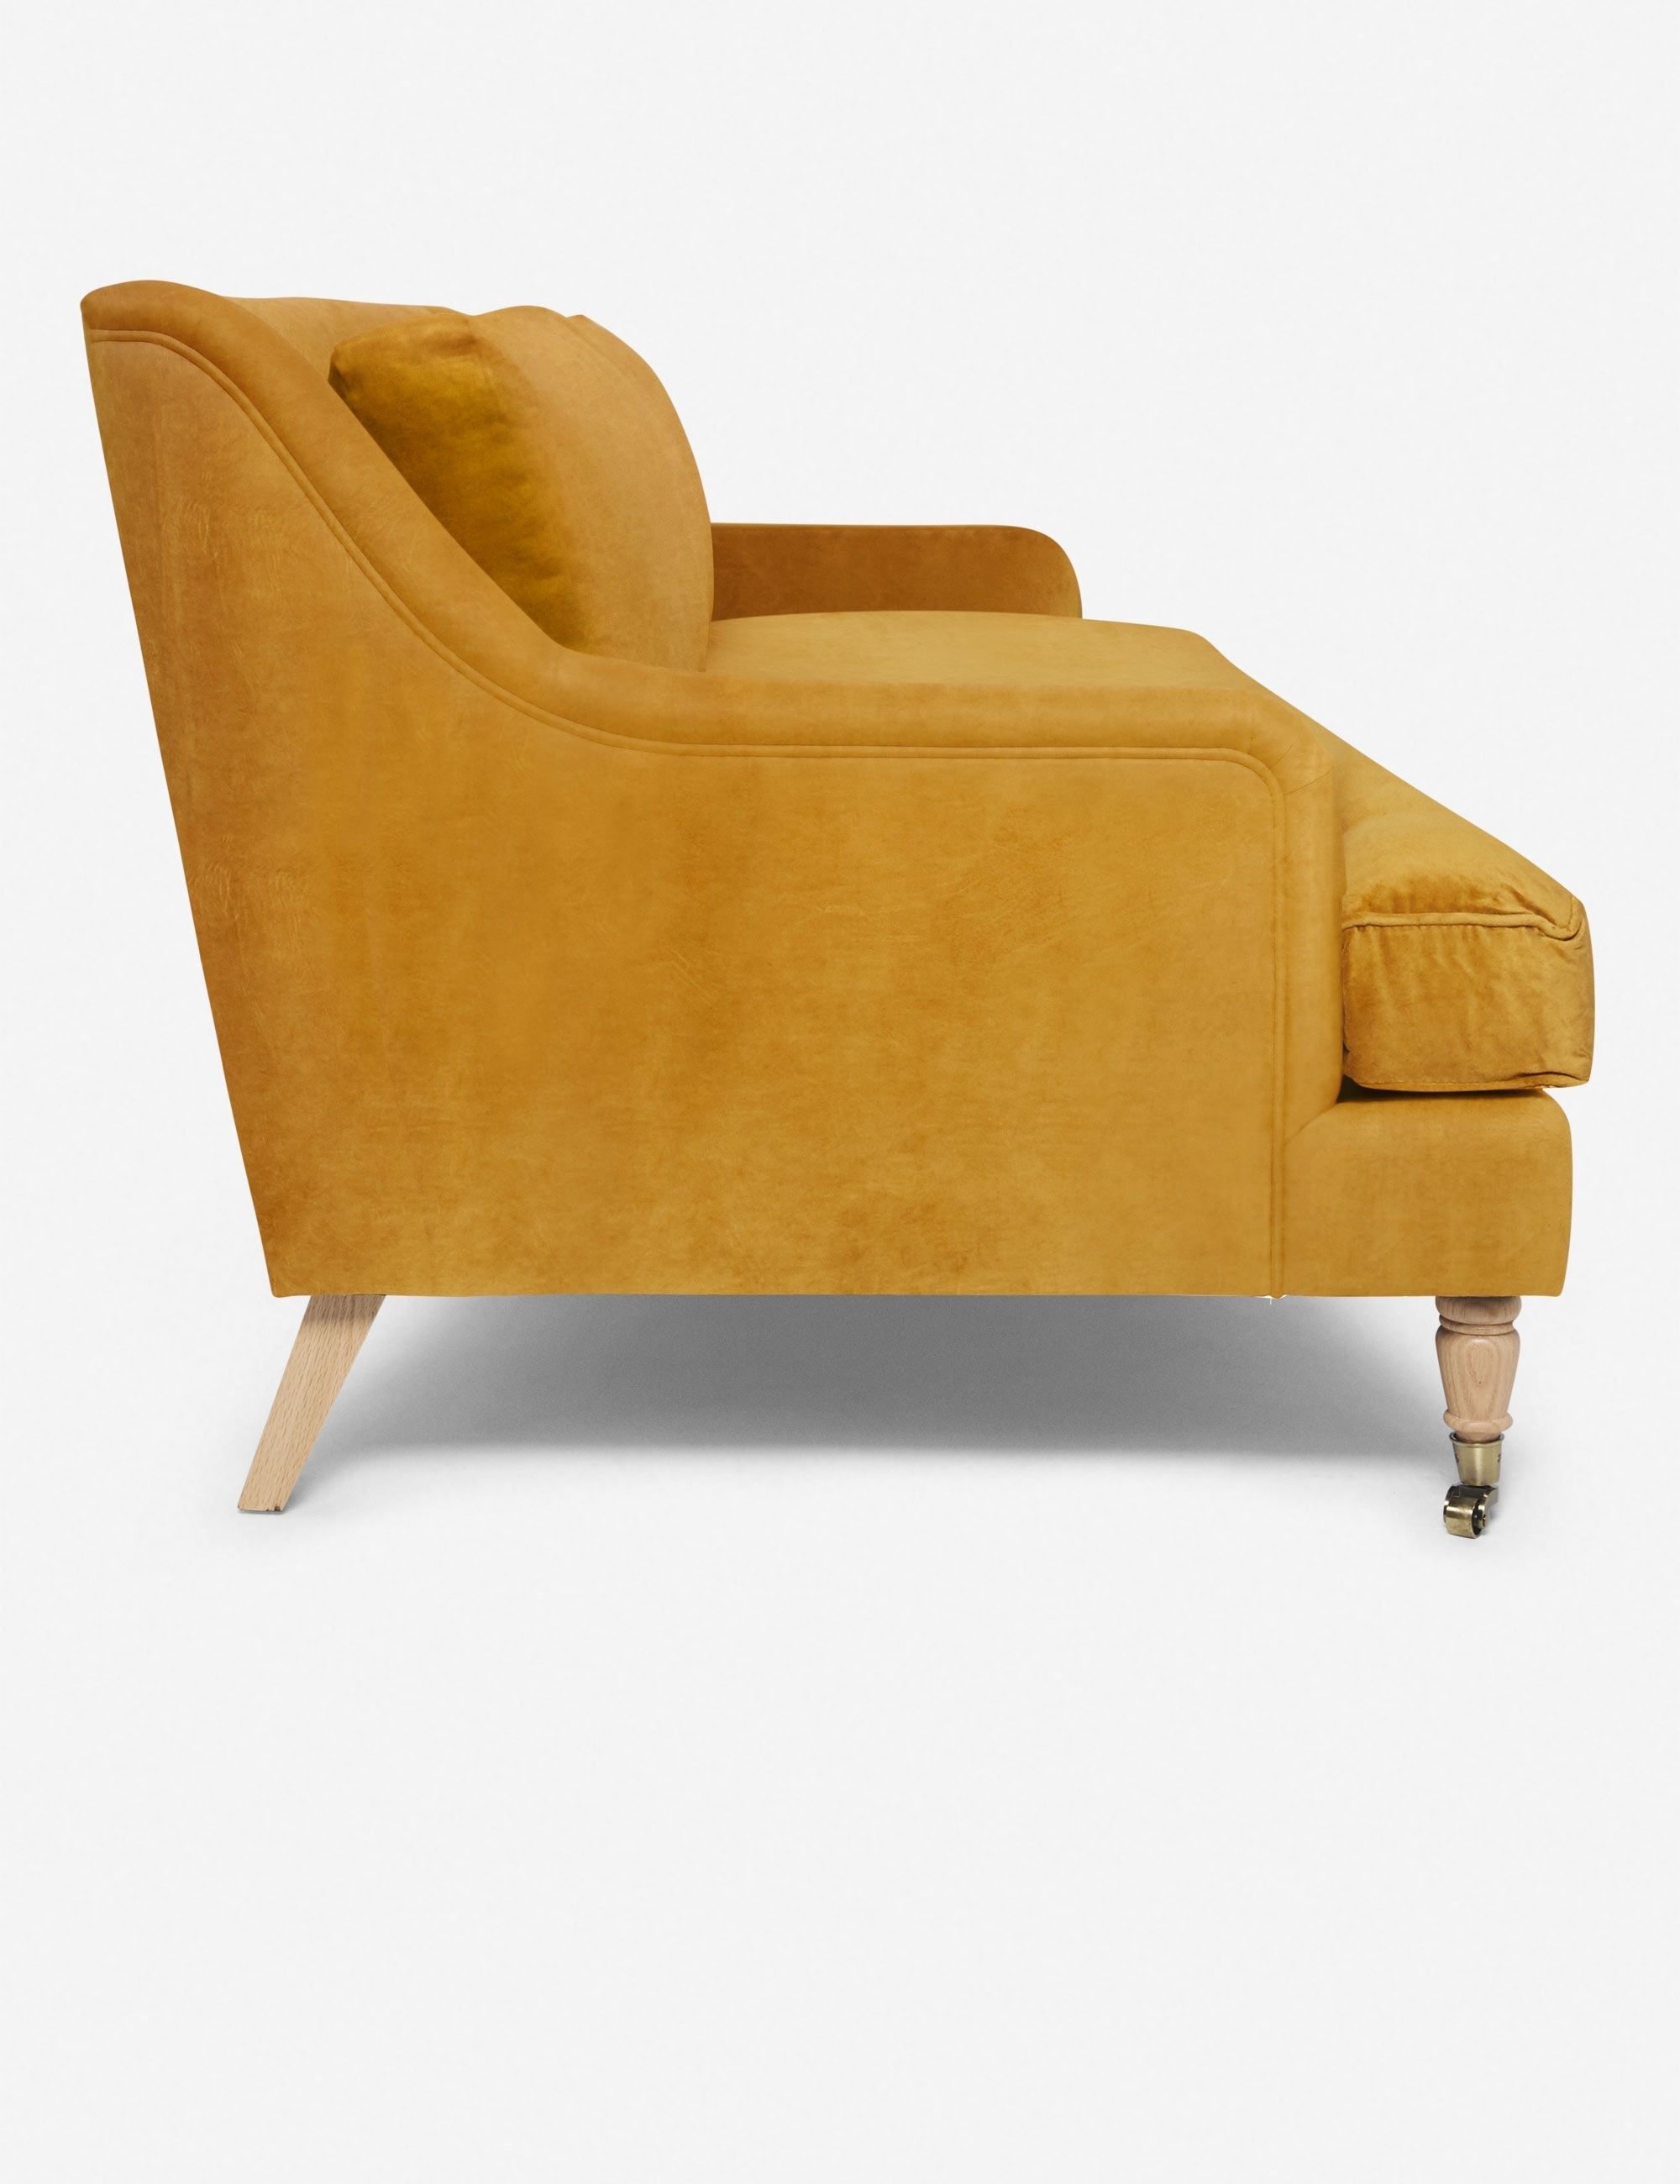 Rivington Velvet Sofa, Goldenrod By Ginny Macdonald 7' - Image 2